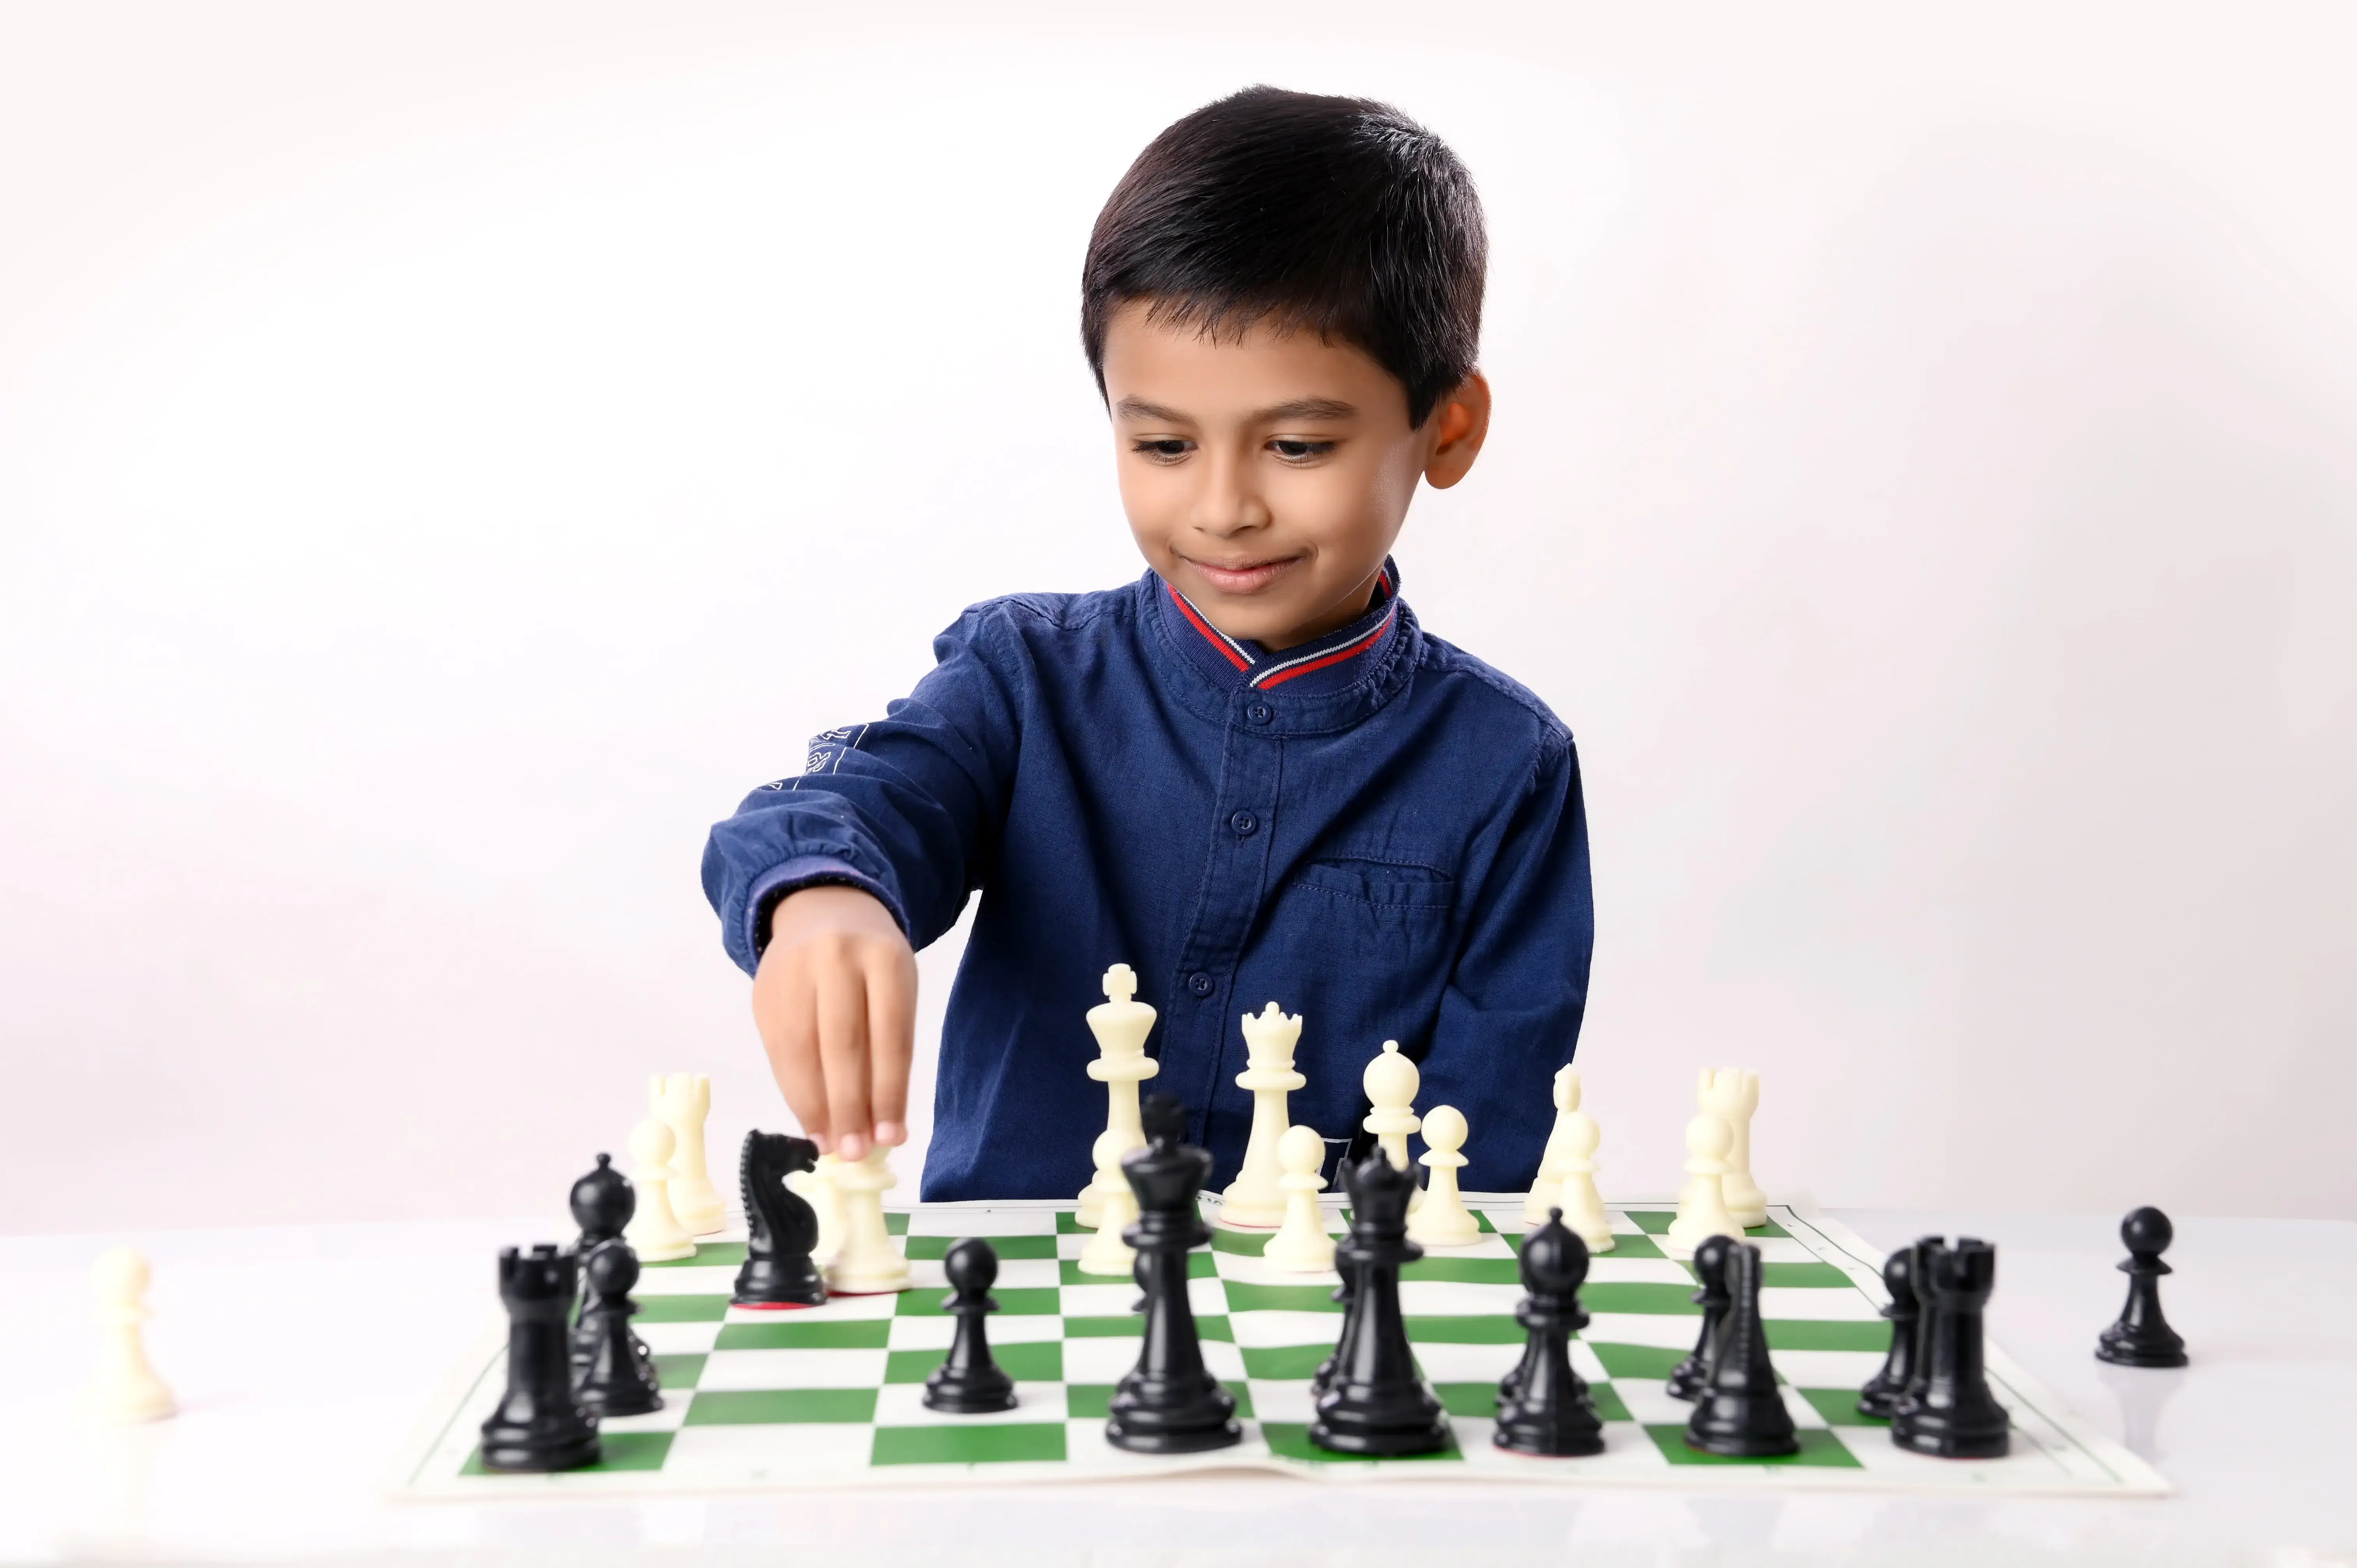 Chessmatics Online Chess Academy